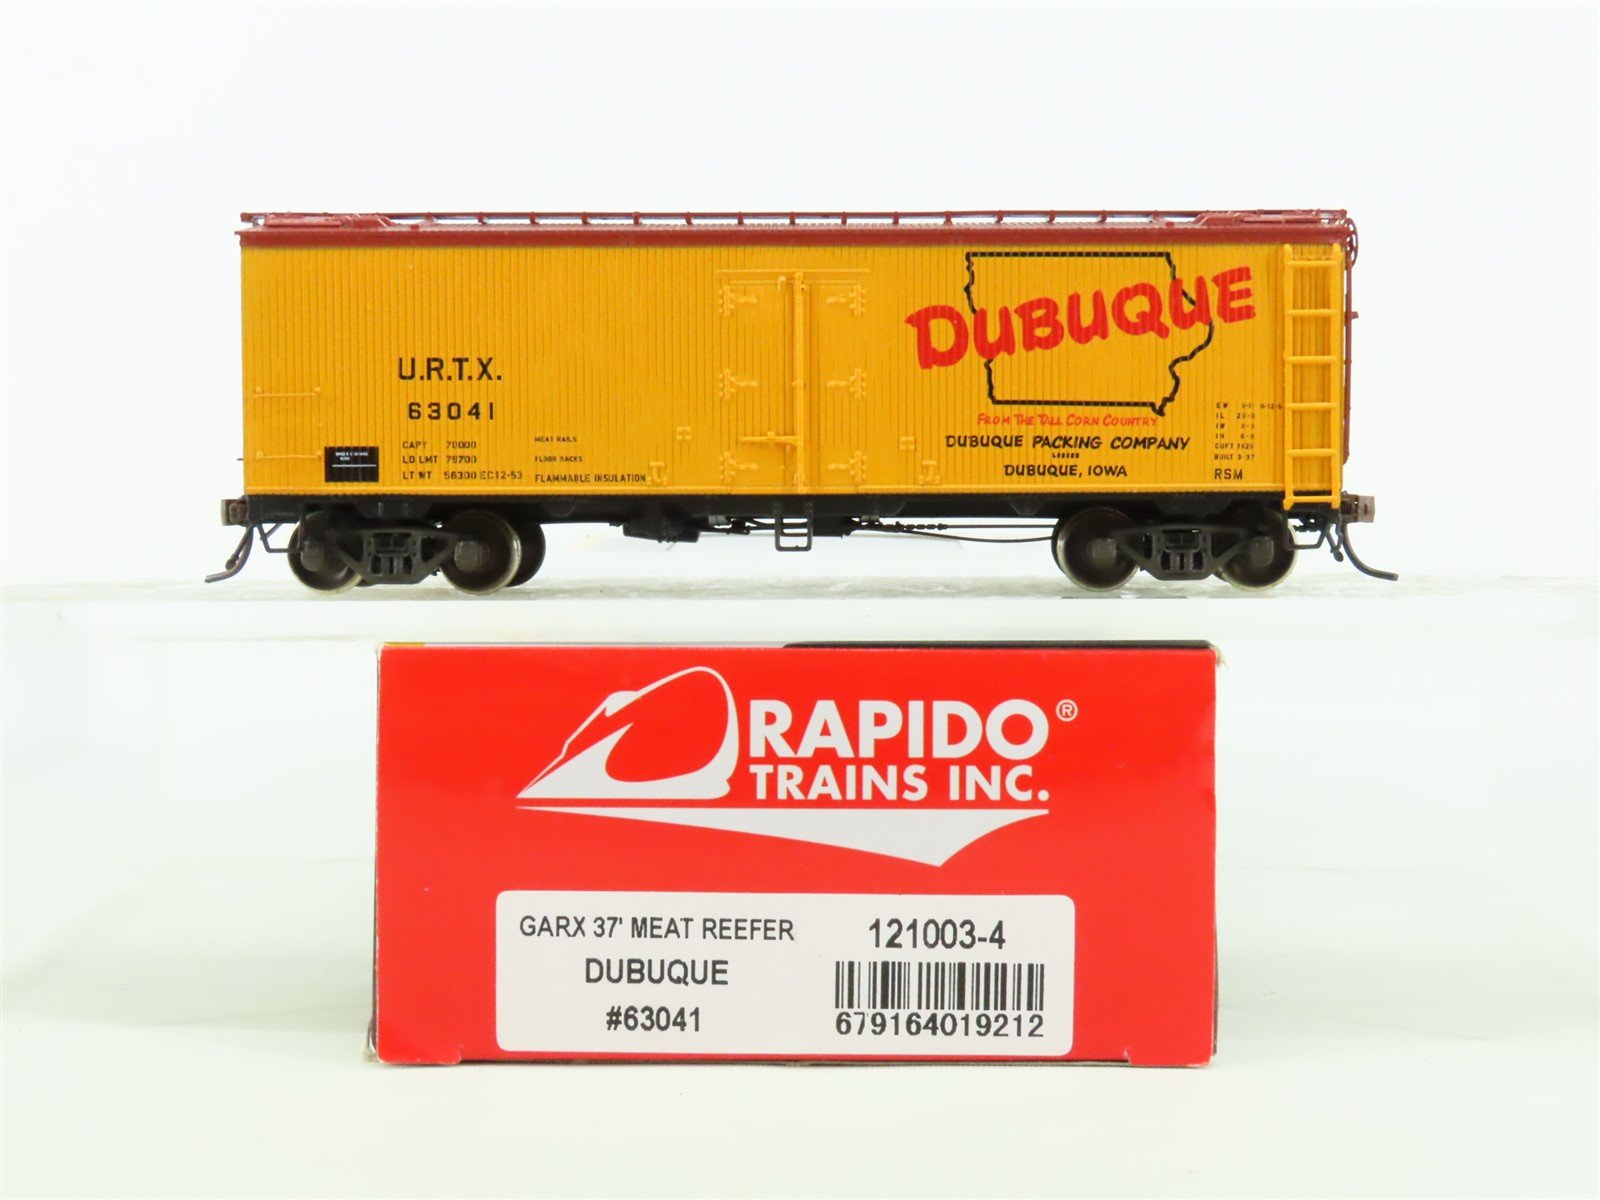 HO Scale Rapido #121003-4 URTX Dubuque GARX 37' Meat Reefer #63041 - Custom